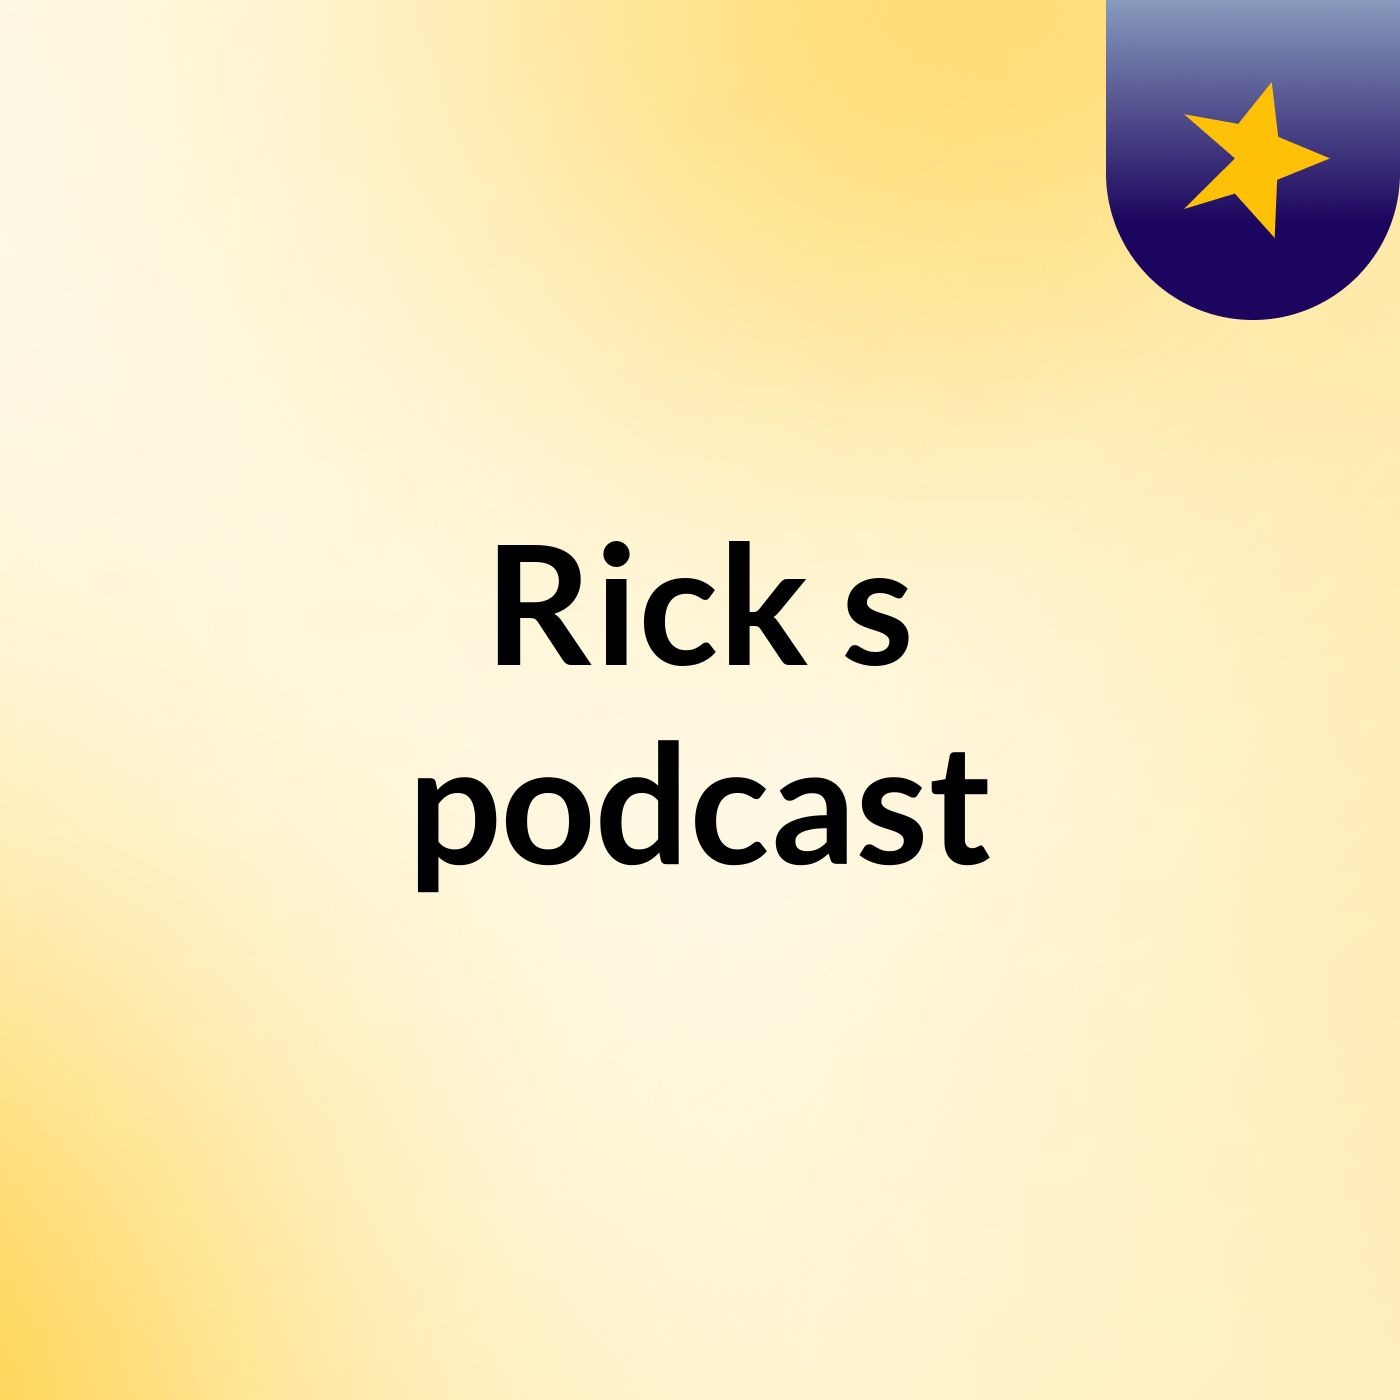 Rick's podcast